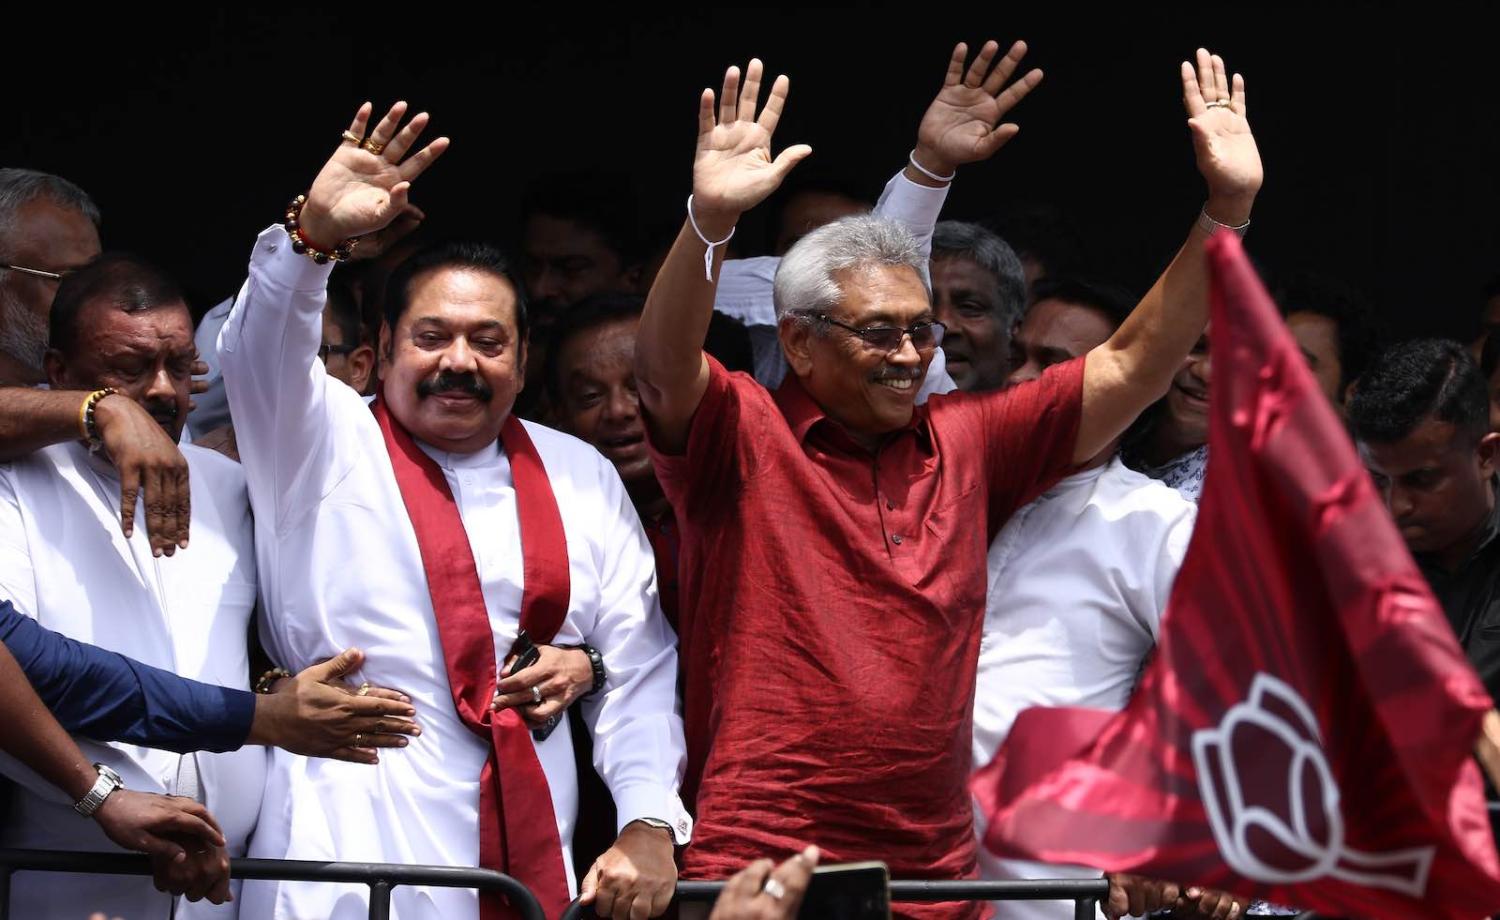 Sri Lankan presidential candidate Gotabaya Rajapaksa (R) and his brother, former president Mahinda Rajapaksa (L), greet supporters in Colombo, 7 October 2019. (Photo by Tharaka Basnayaka/NurPhoto via Getty)